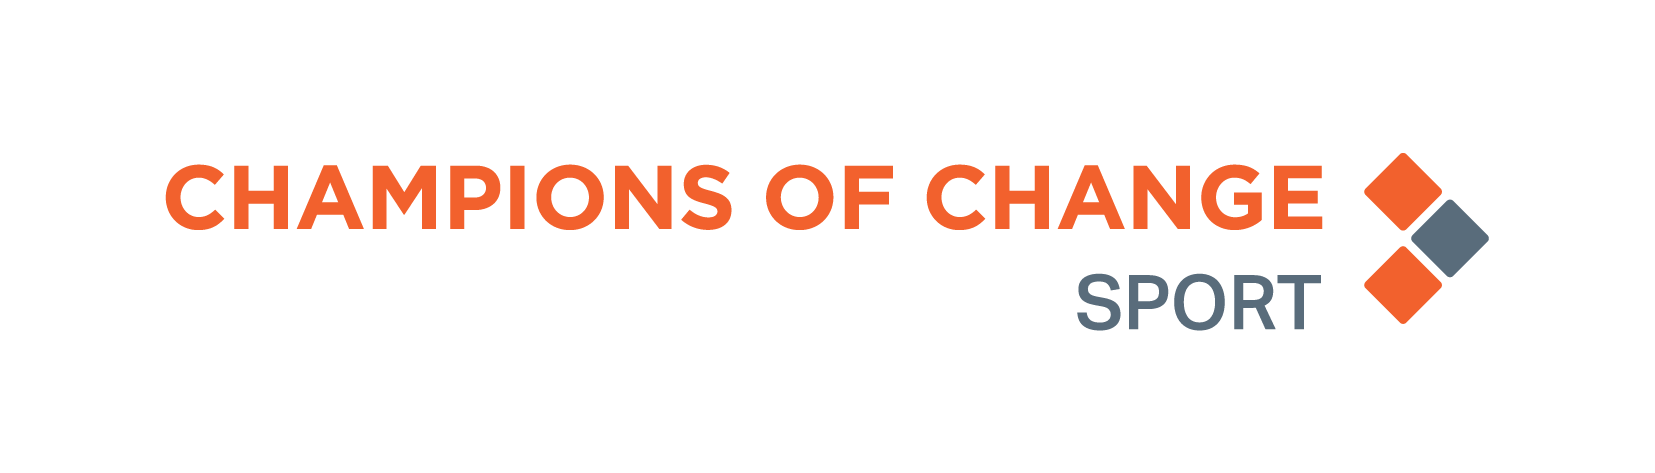 Champions of Change Sport Group Logo